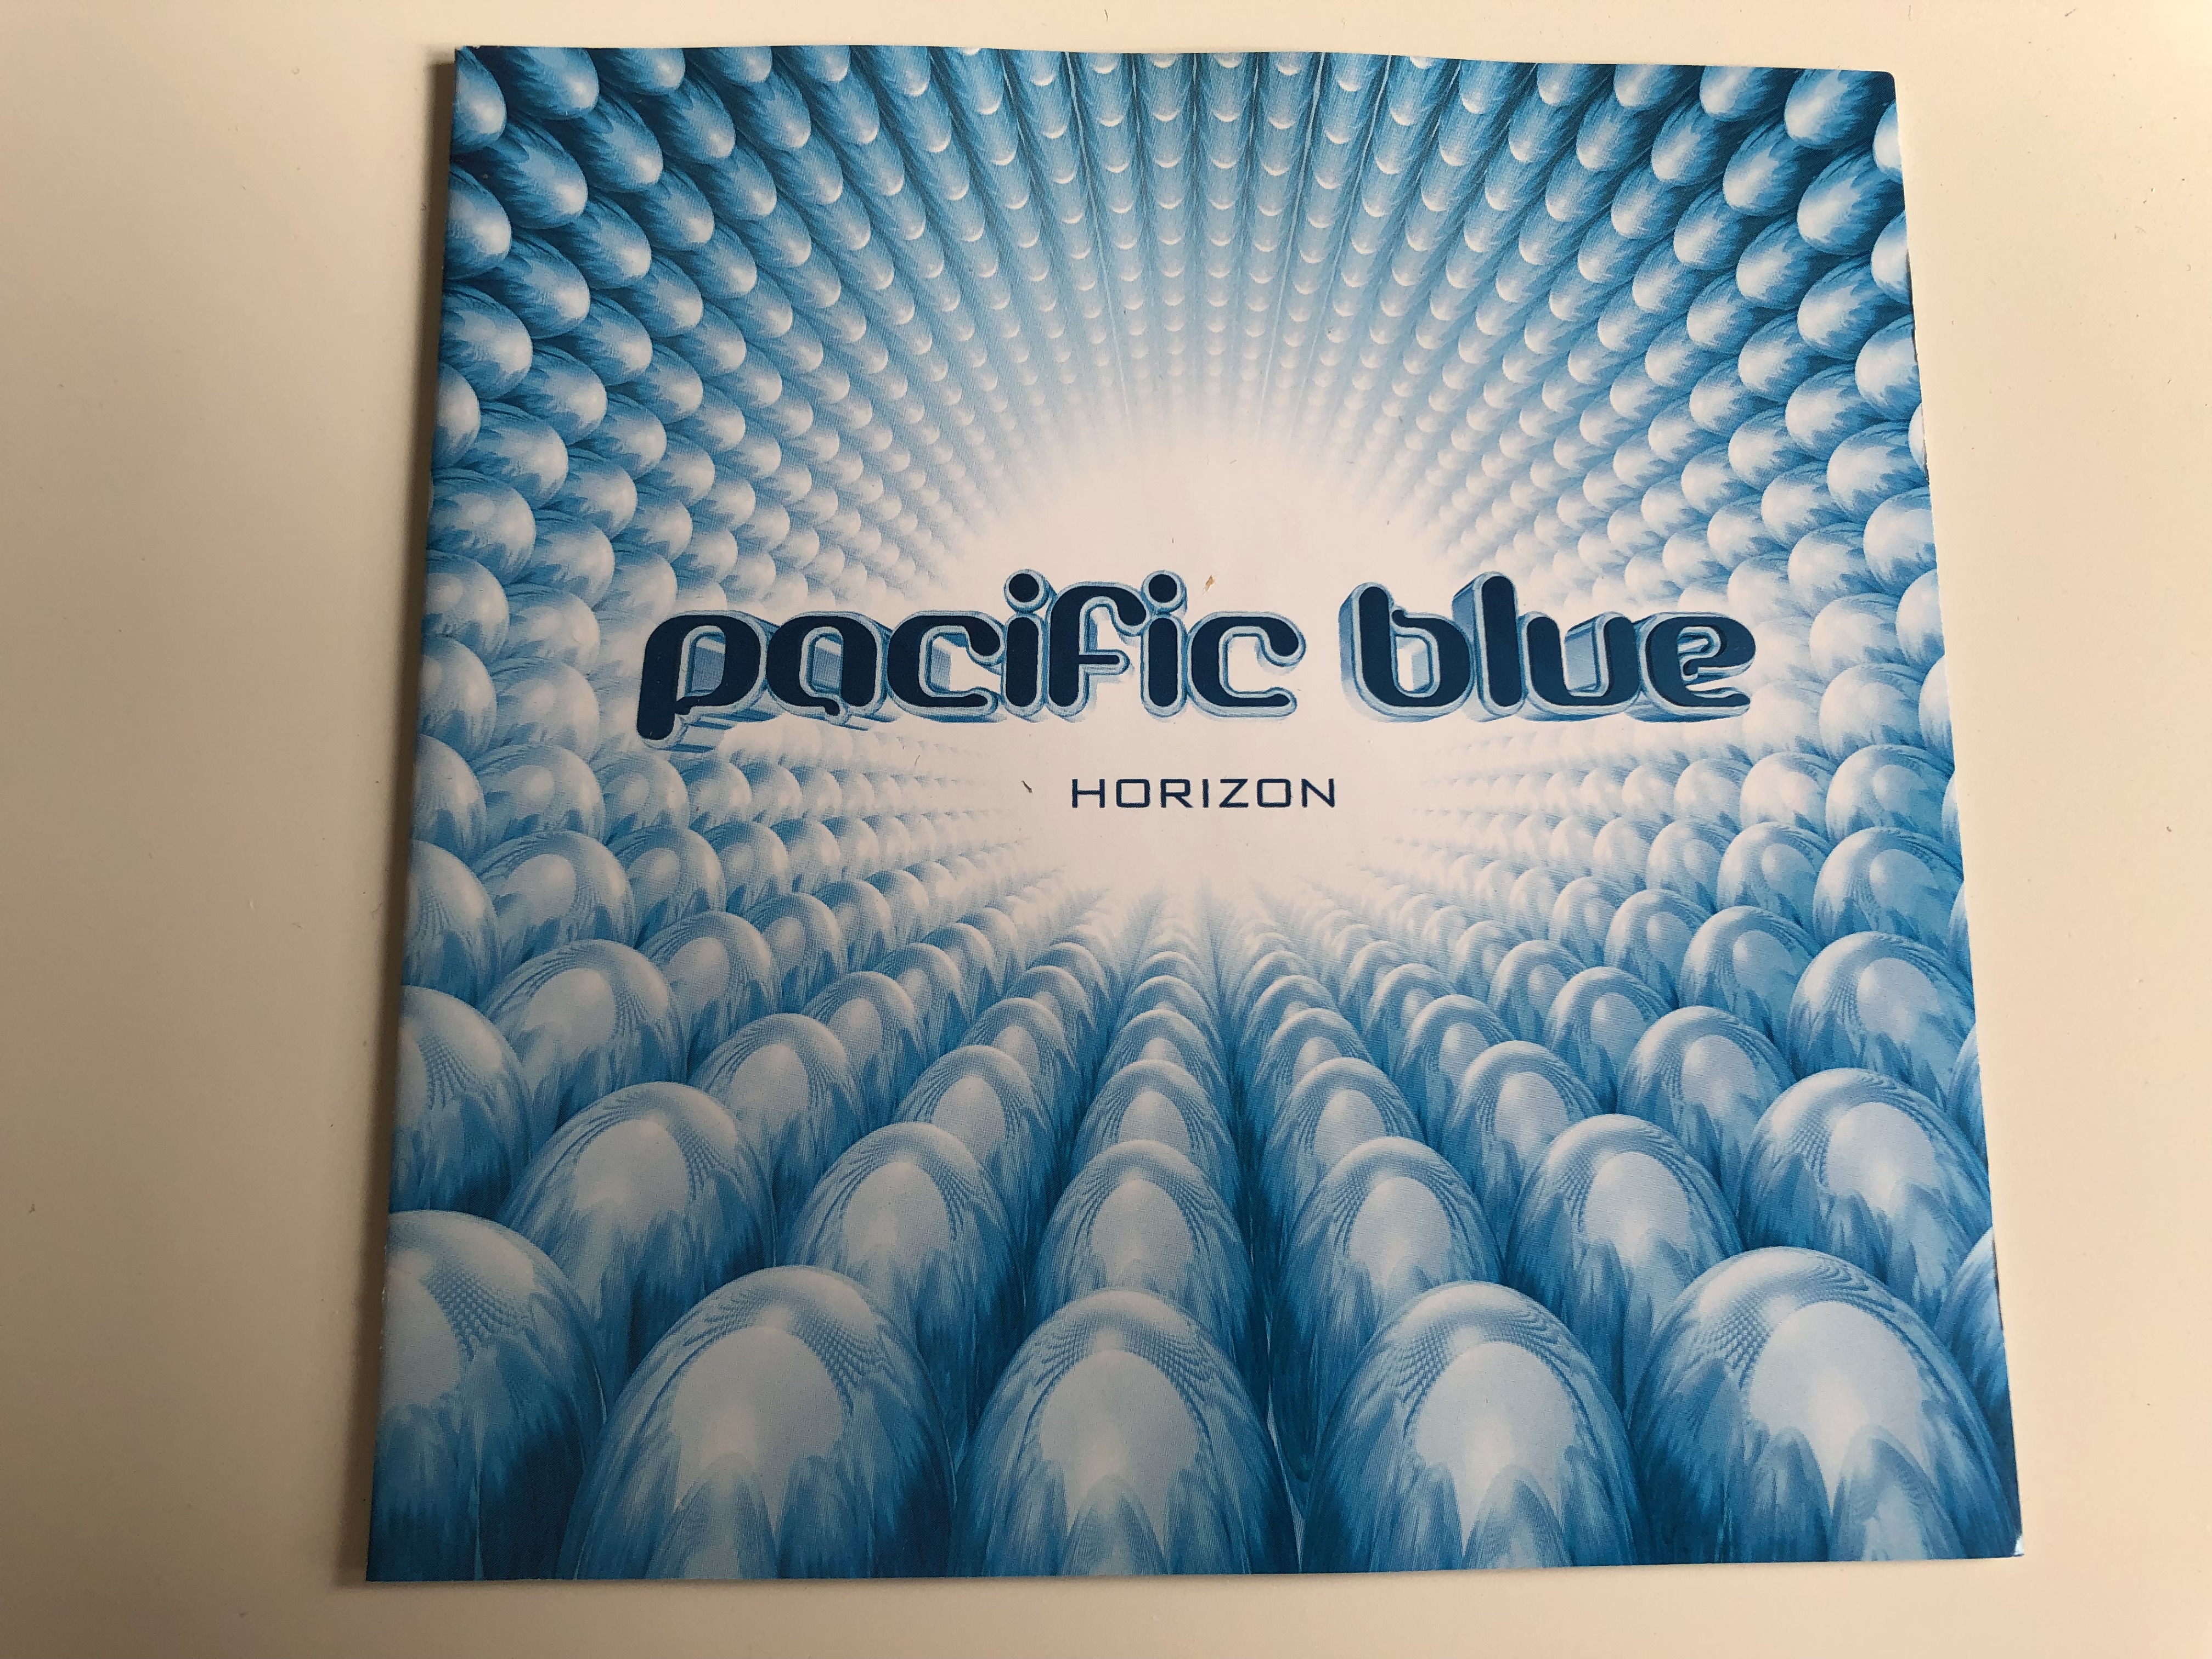 pacific-blue-horizon-audio-cd-1999-sunrise-amore-ocean-hurricane-dawn-eclipse-edel-records-0066872-clu-1-.jpg